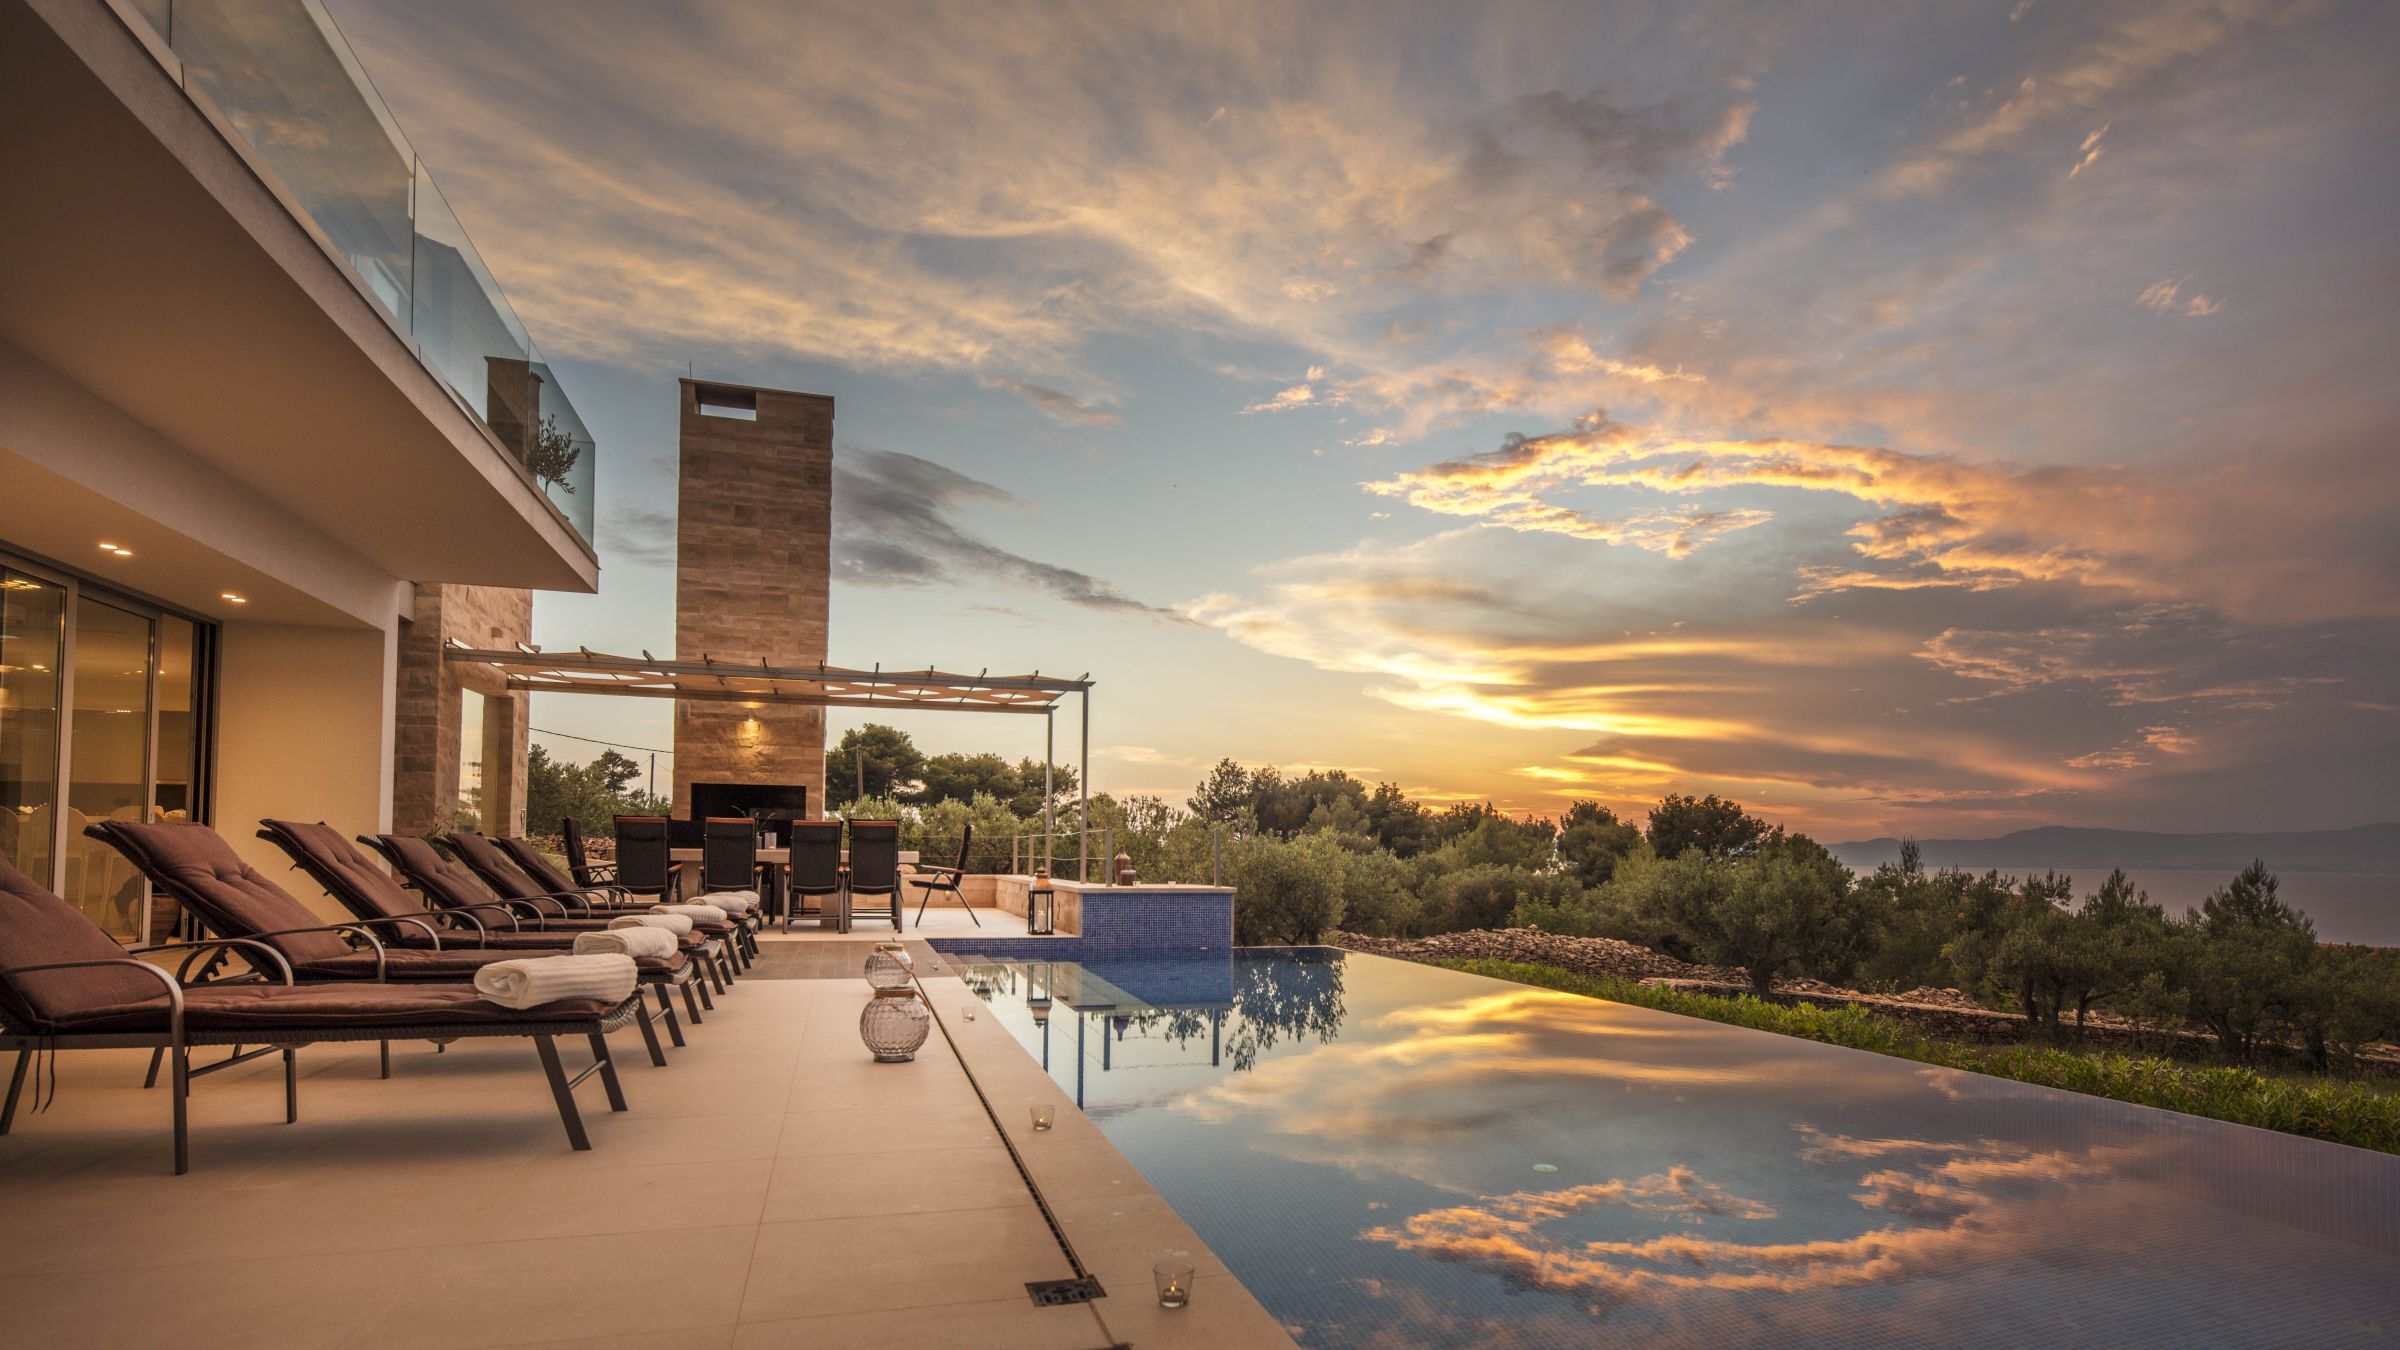 BRAC LUXURY VILLAS - Luxury Villa Olive Garden Brac with the heated pool and jacuzzi near the sea in Splitska